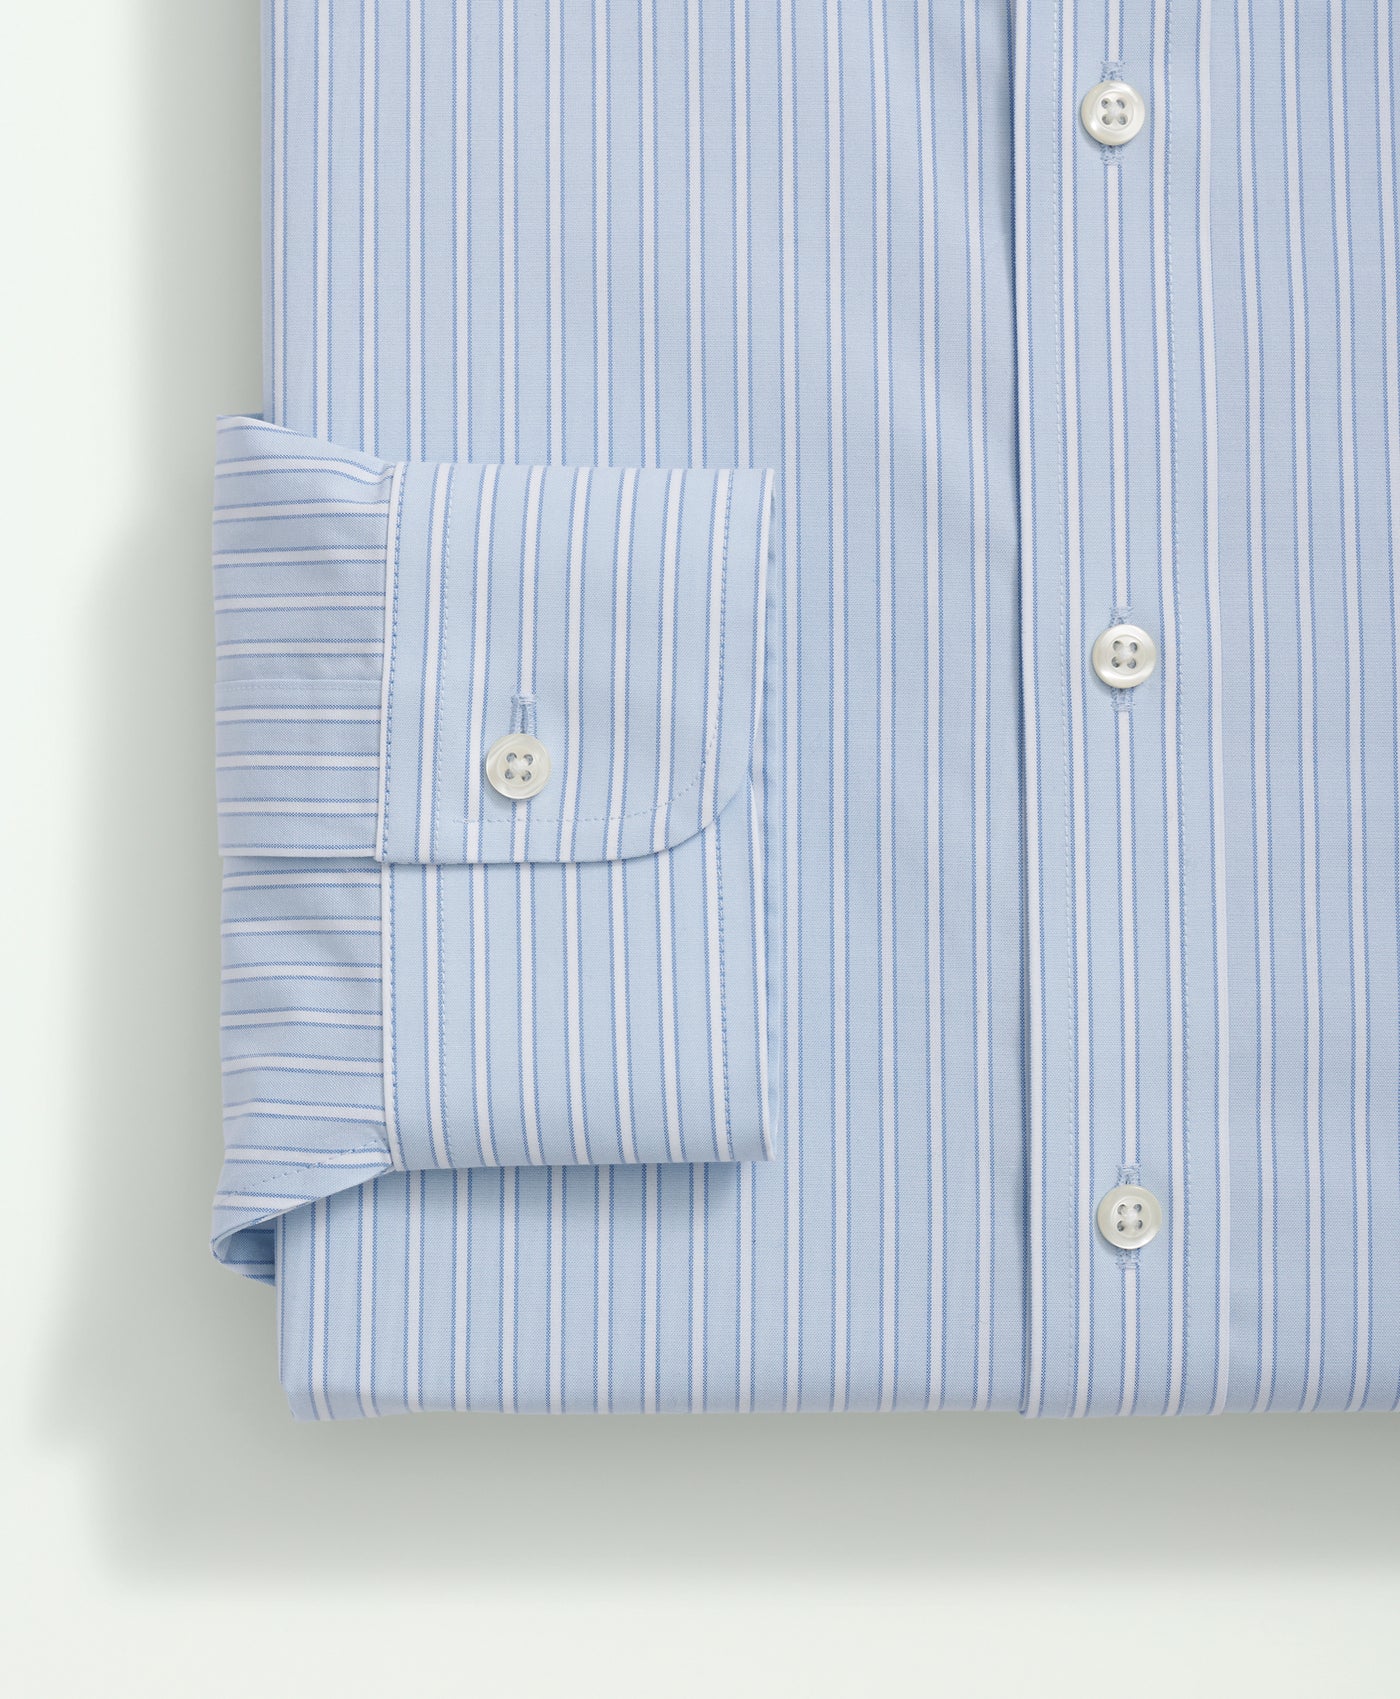 Stretch Regent Regular-Fit Supima Cotton Non-Iron Poplin Button Down Collar, Stripe Dress Shirt - Brooks Brothers Canada